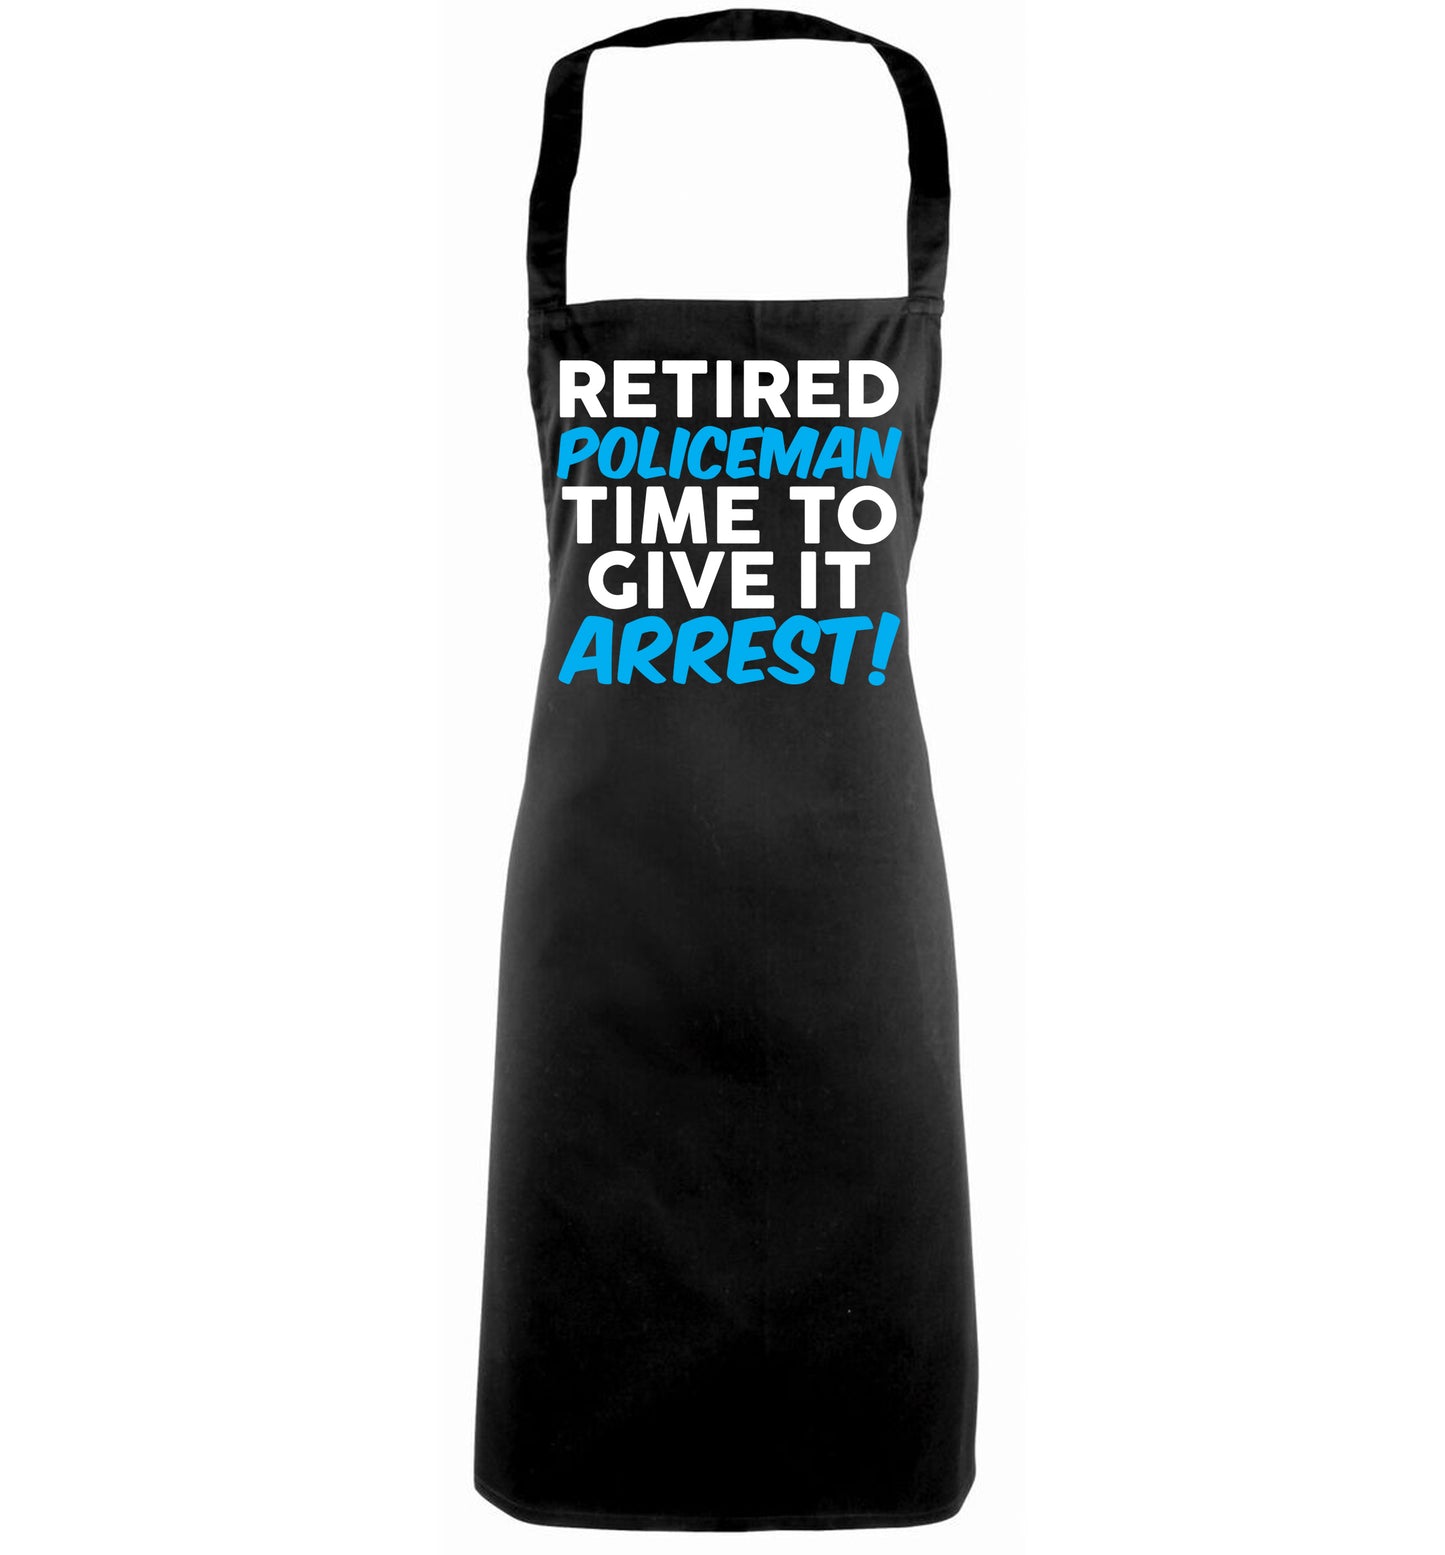 Retired policeman give it arresst! black apron